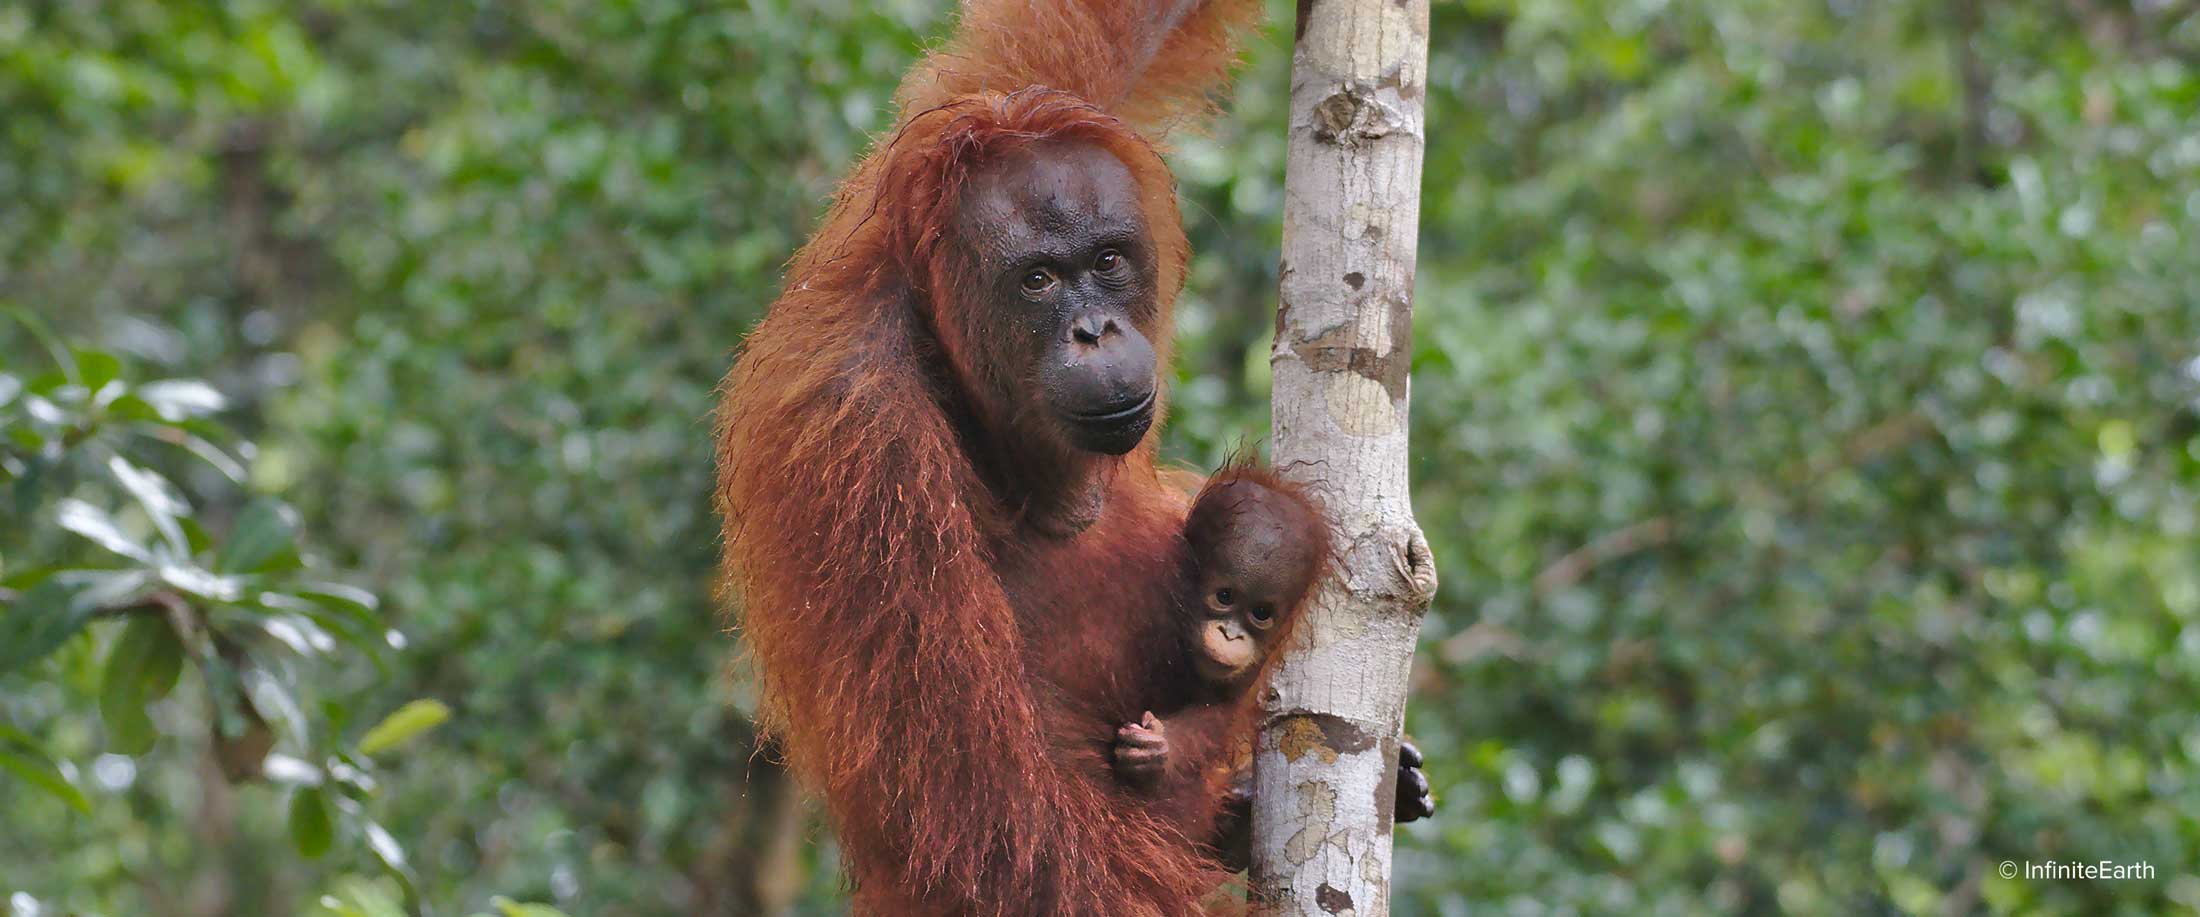 Orangutans Rimba Raya Biodiversity Reserve carbon offset project